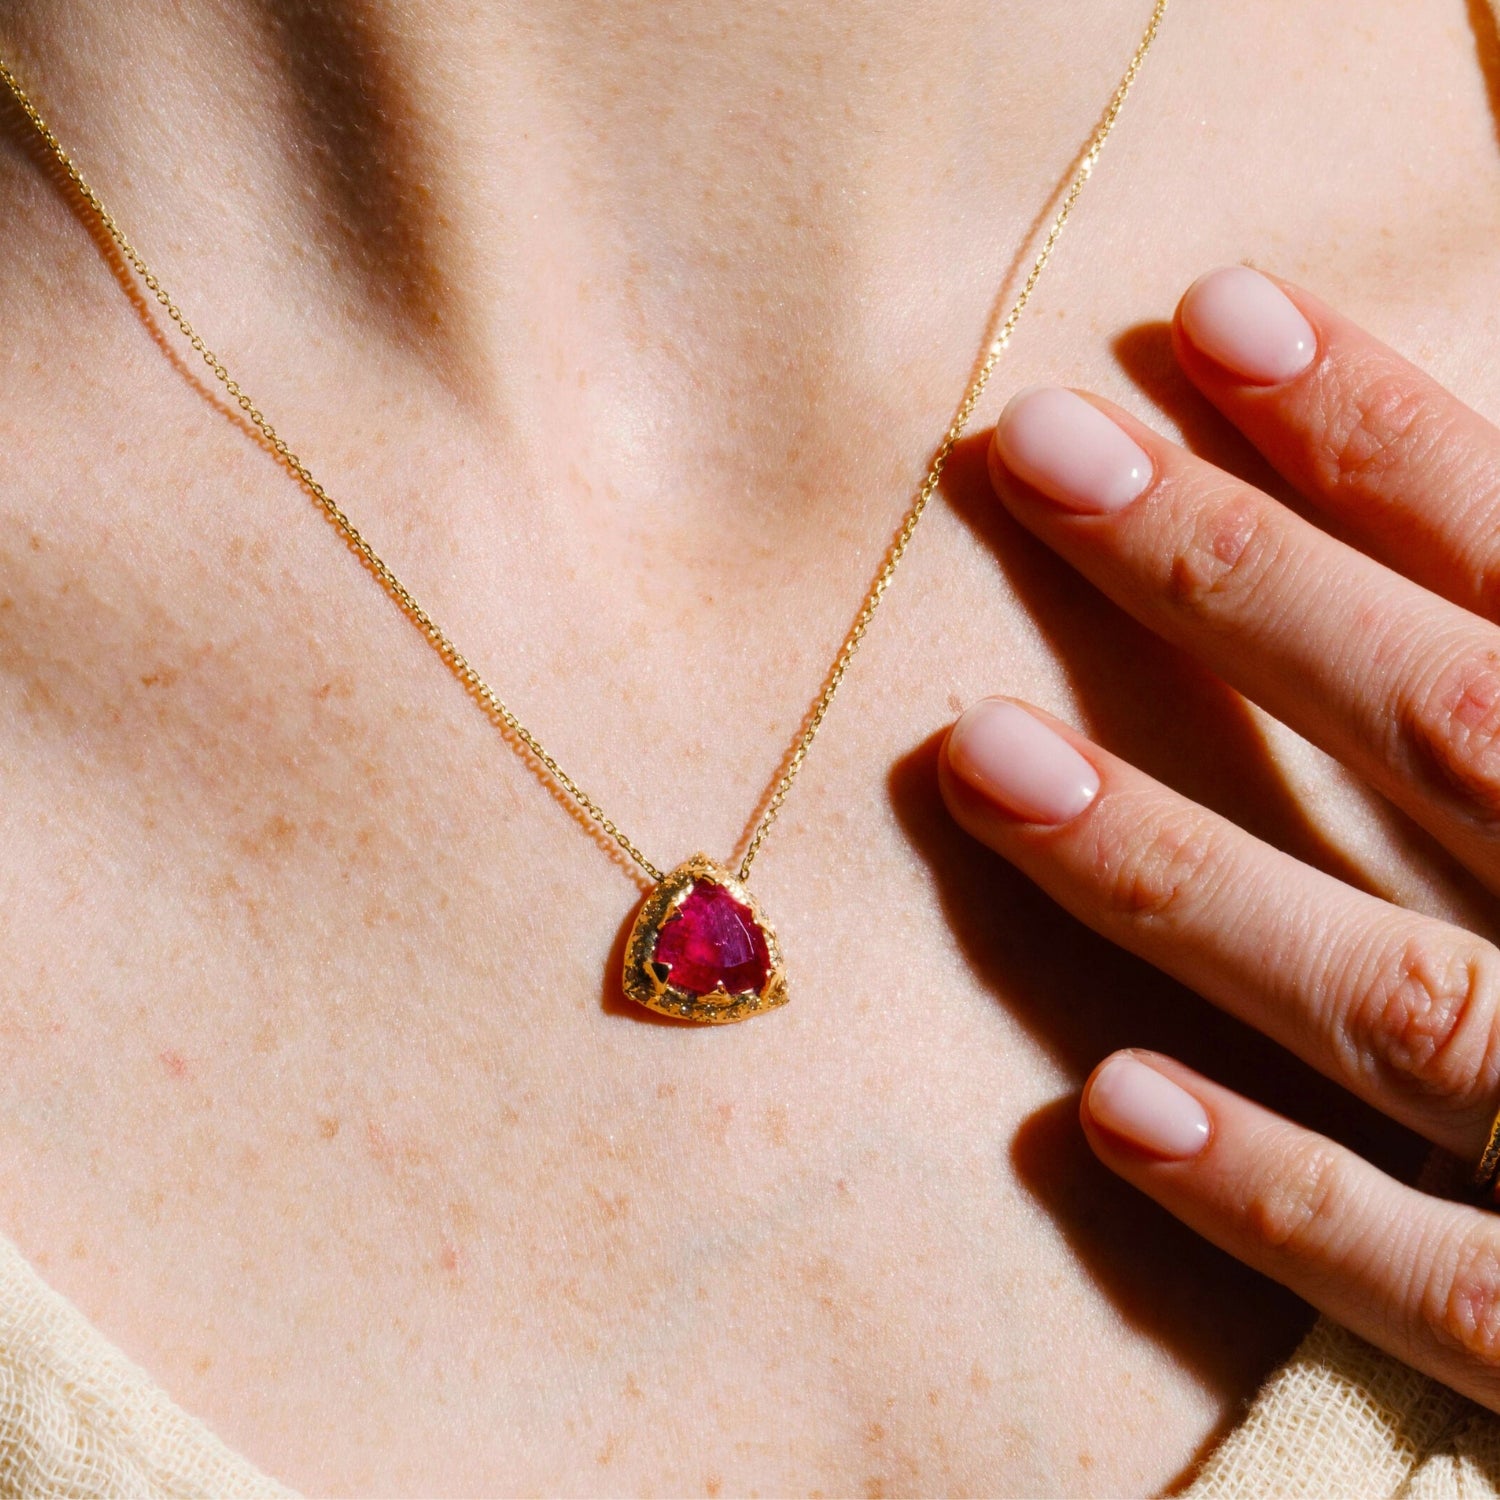 Mystic Trillion Necklace - Pink Tourmaline